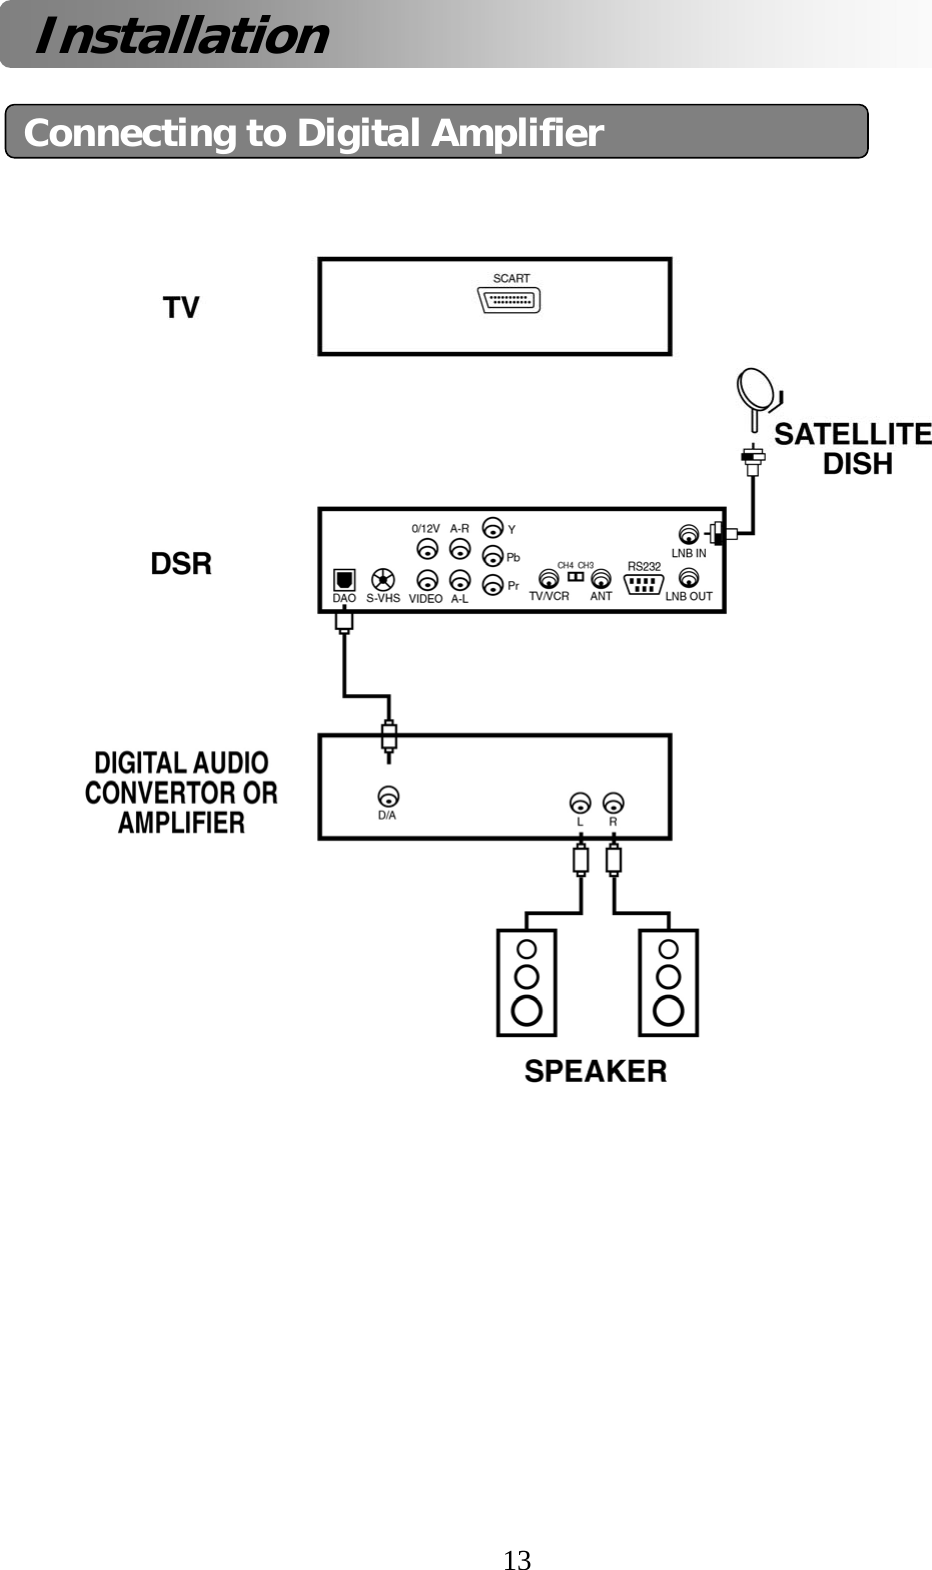 13Connecting to Digital AmplifierInstallation